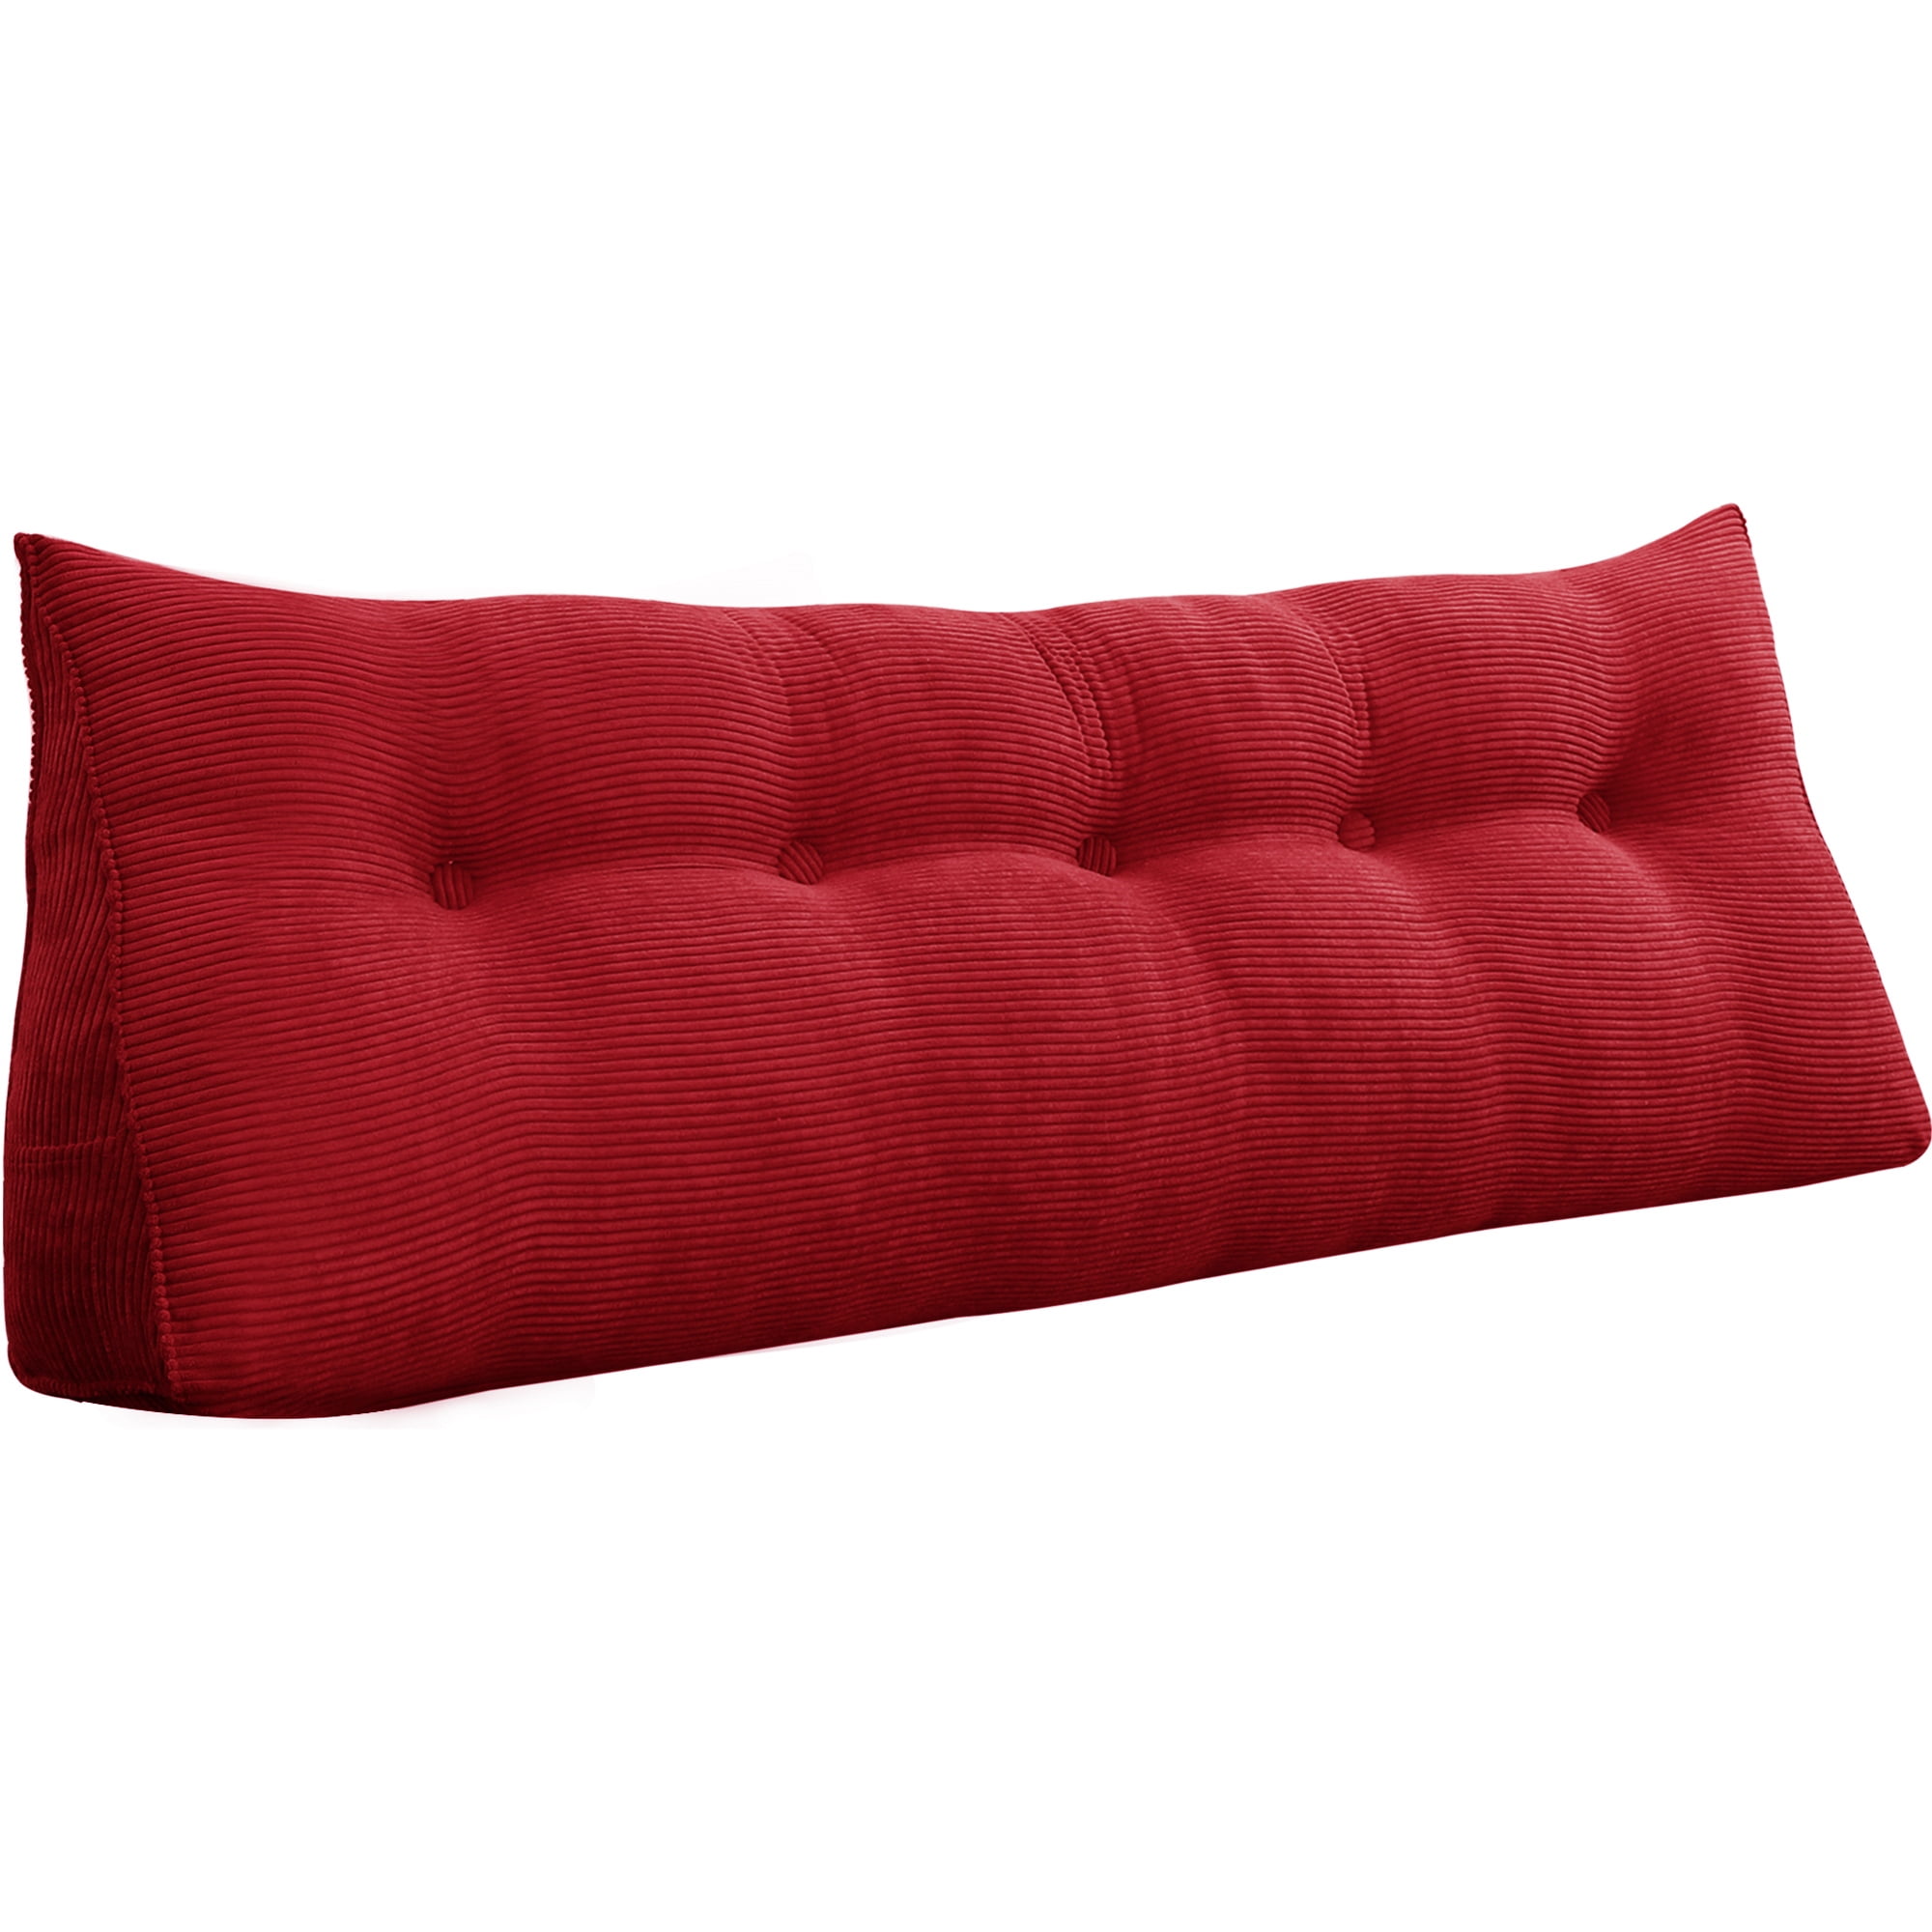 triangular sofa bed back cushion